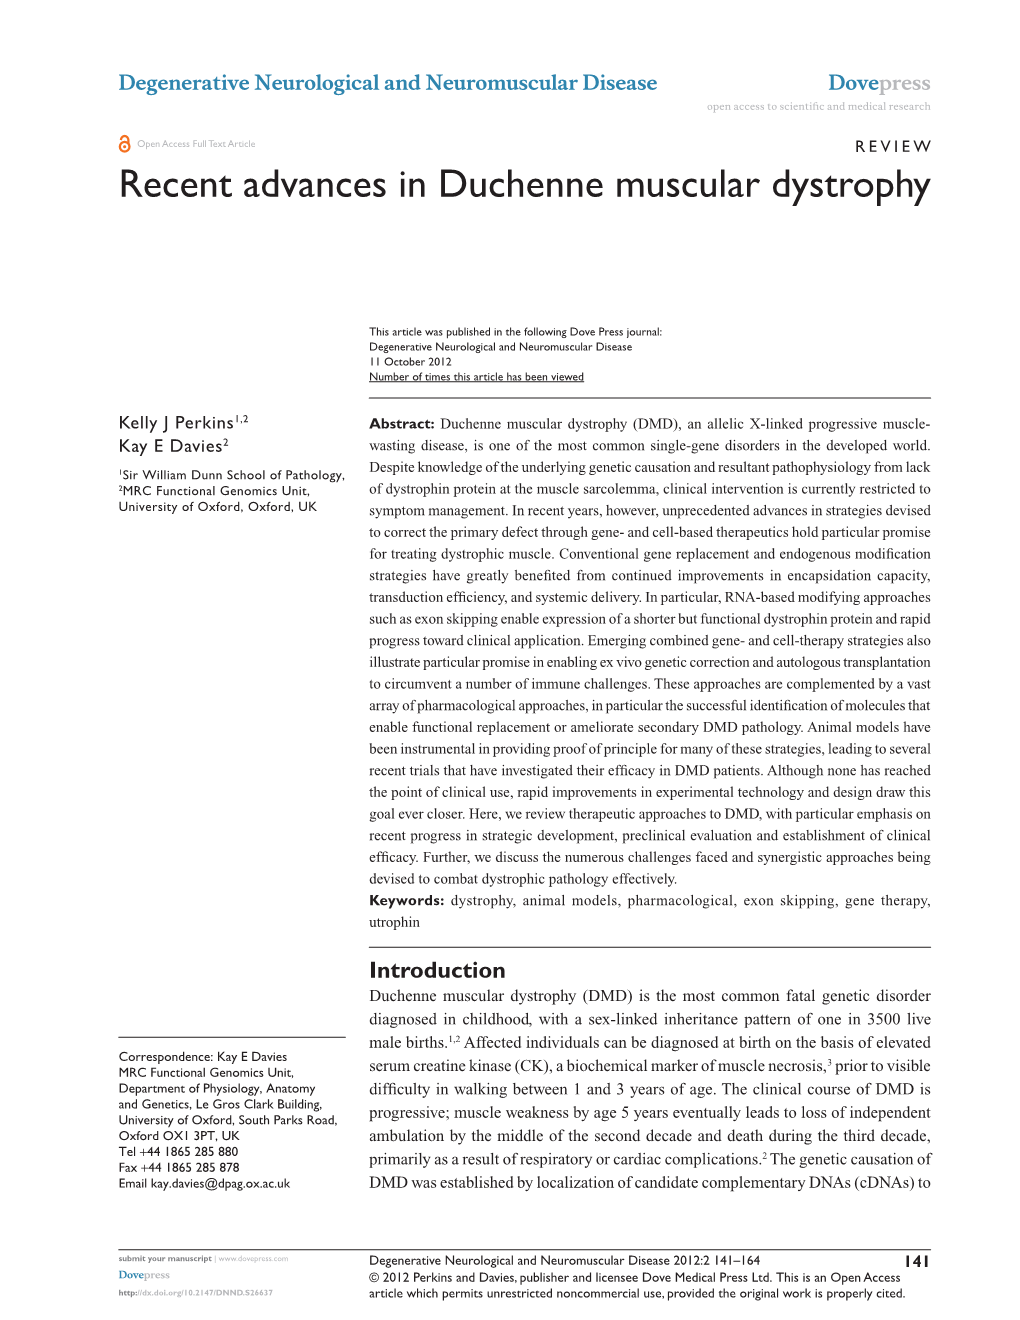 Recent Advances in Duchenne Muscular Dystrophy